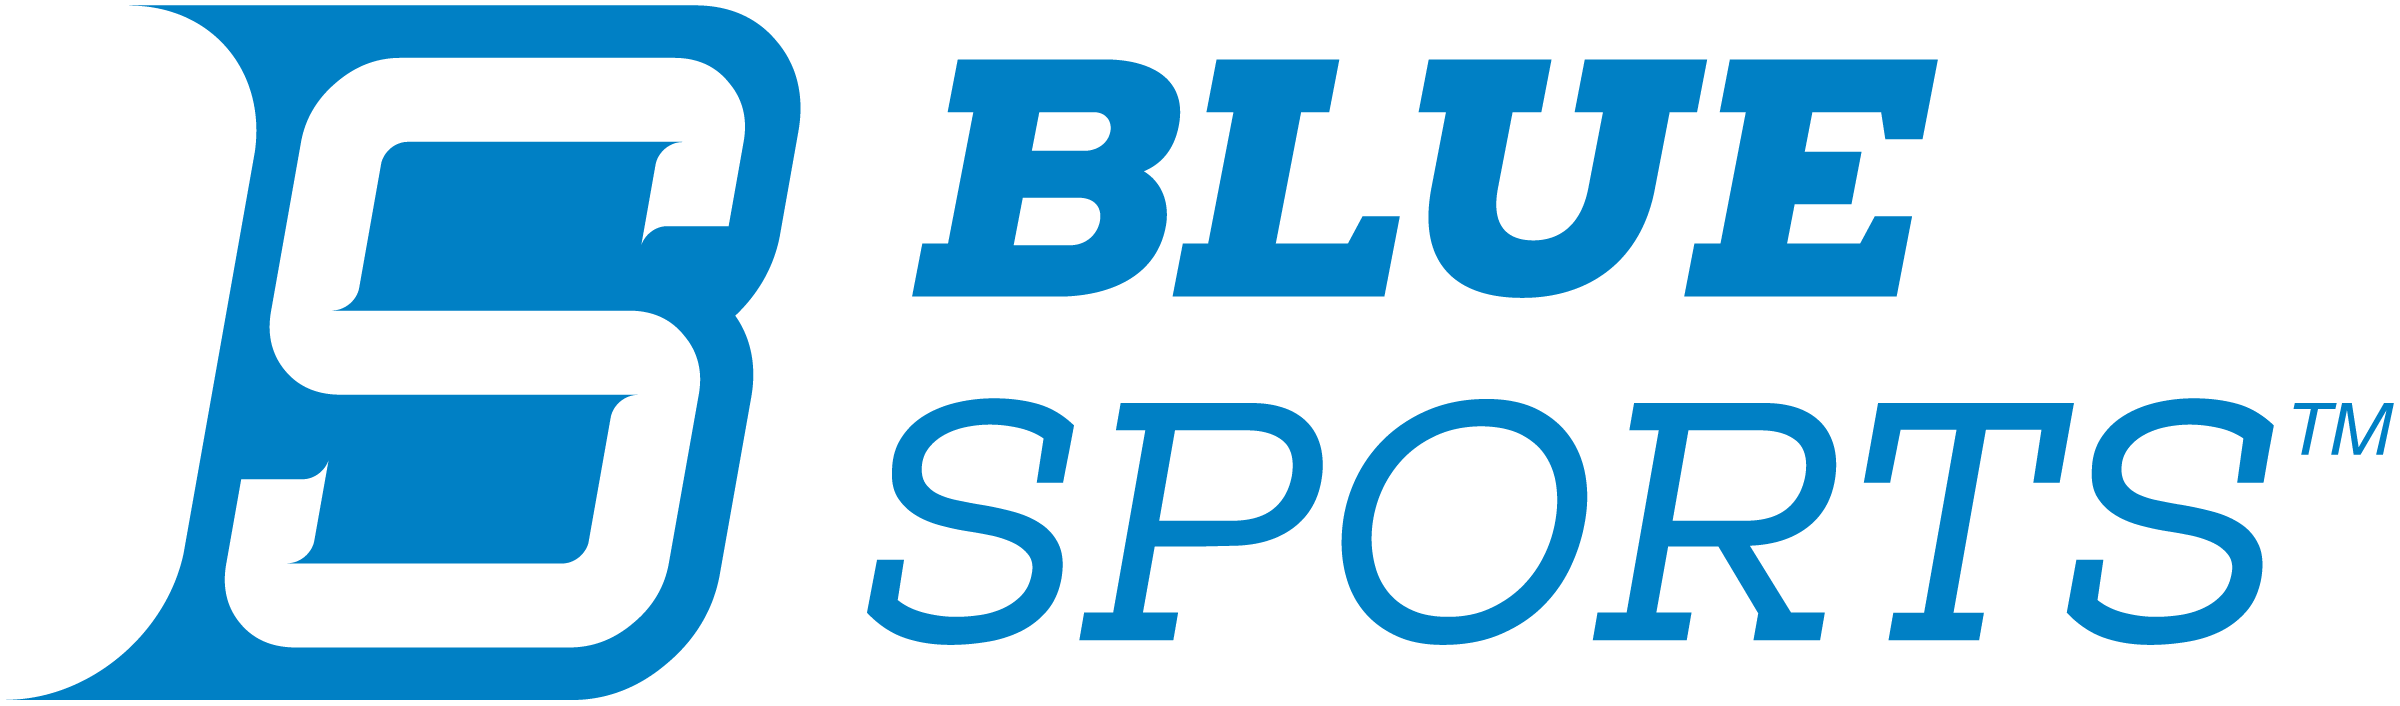 bsports_logo-vertical.png